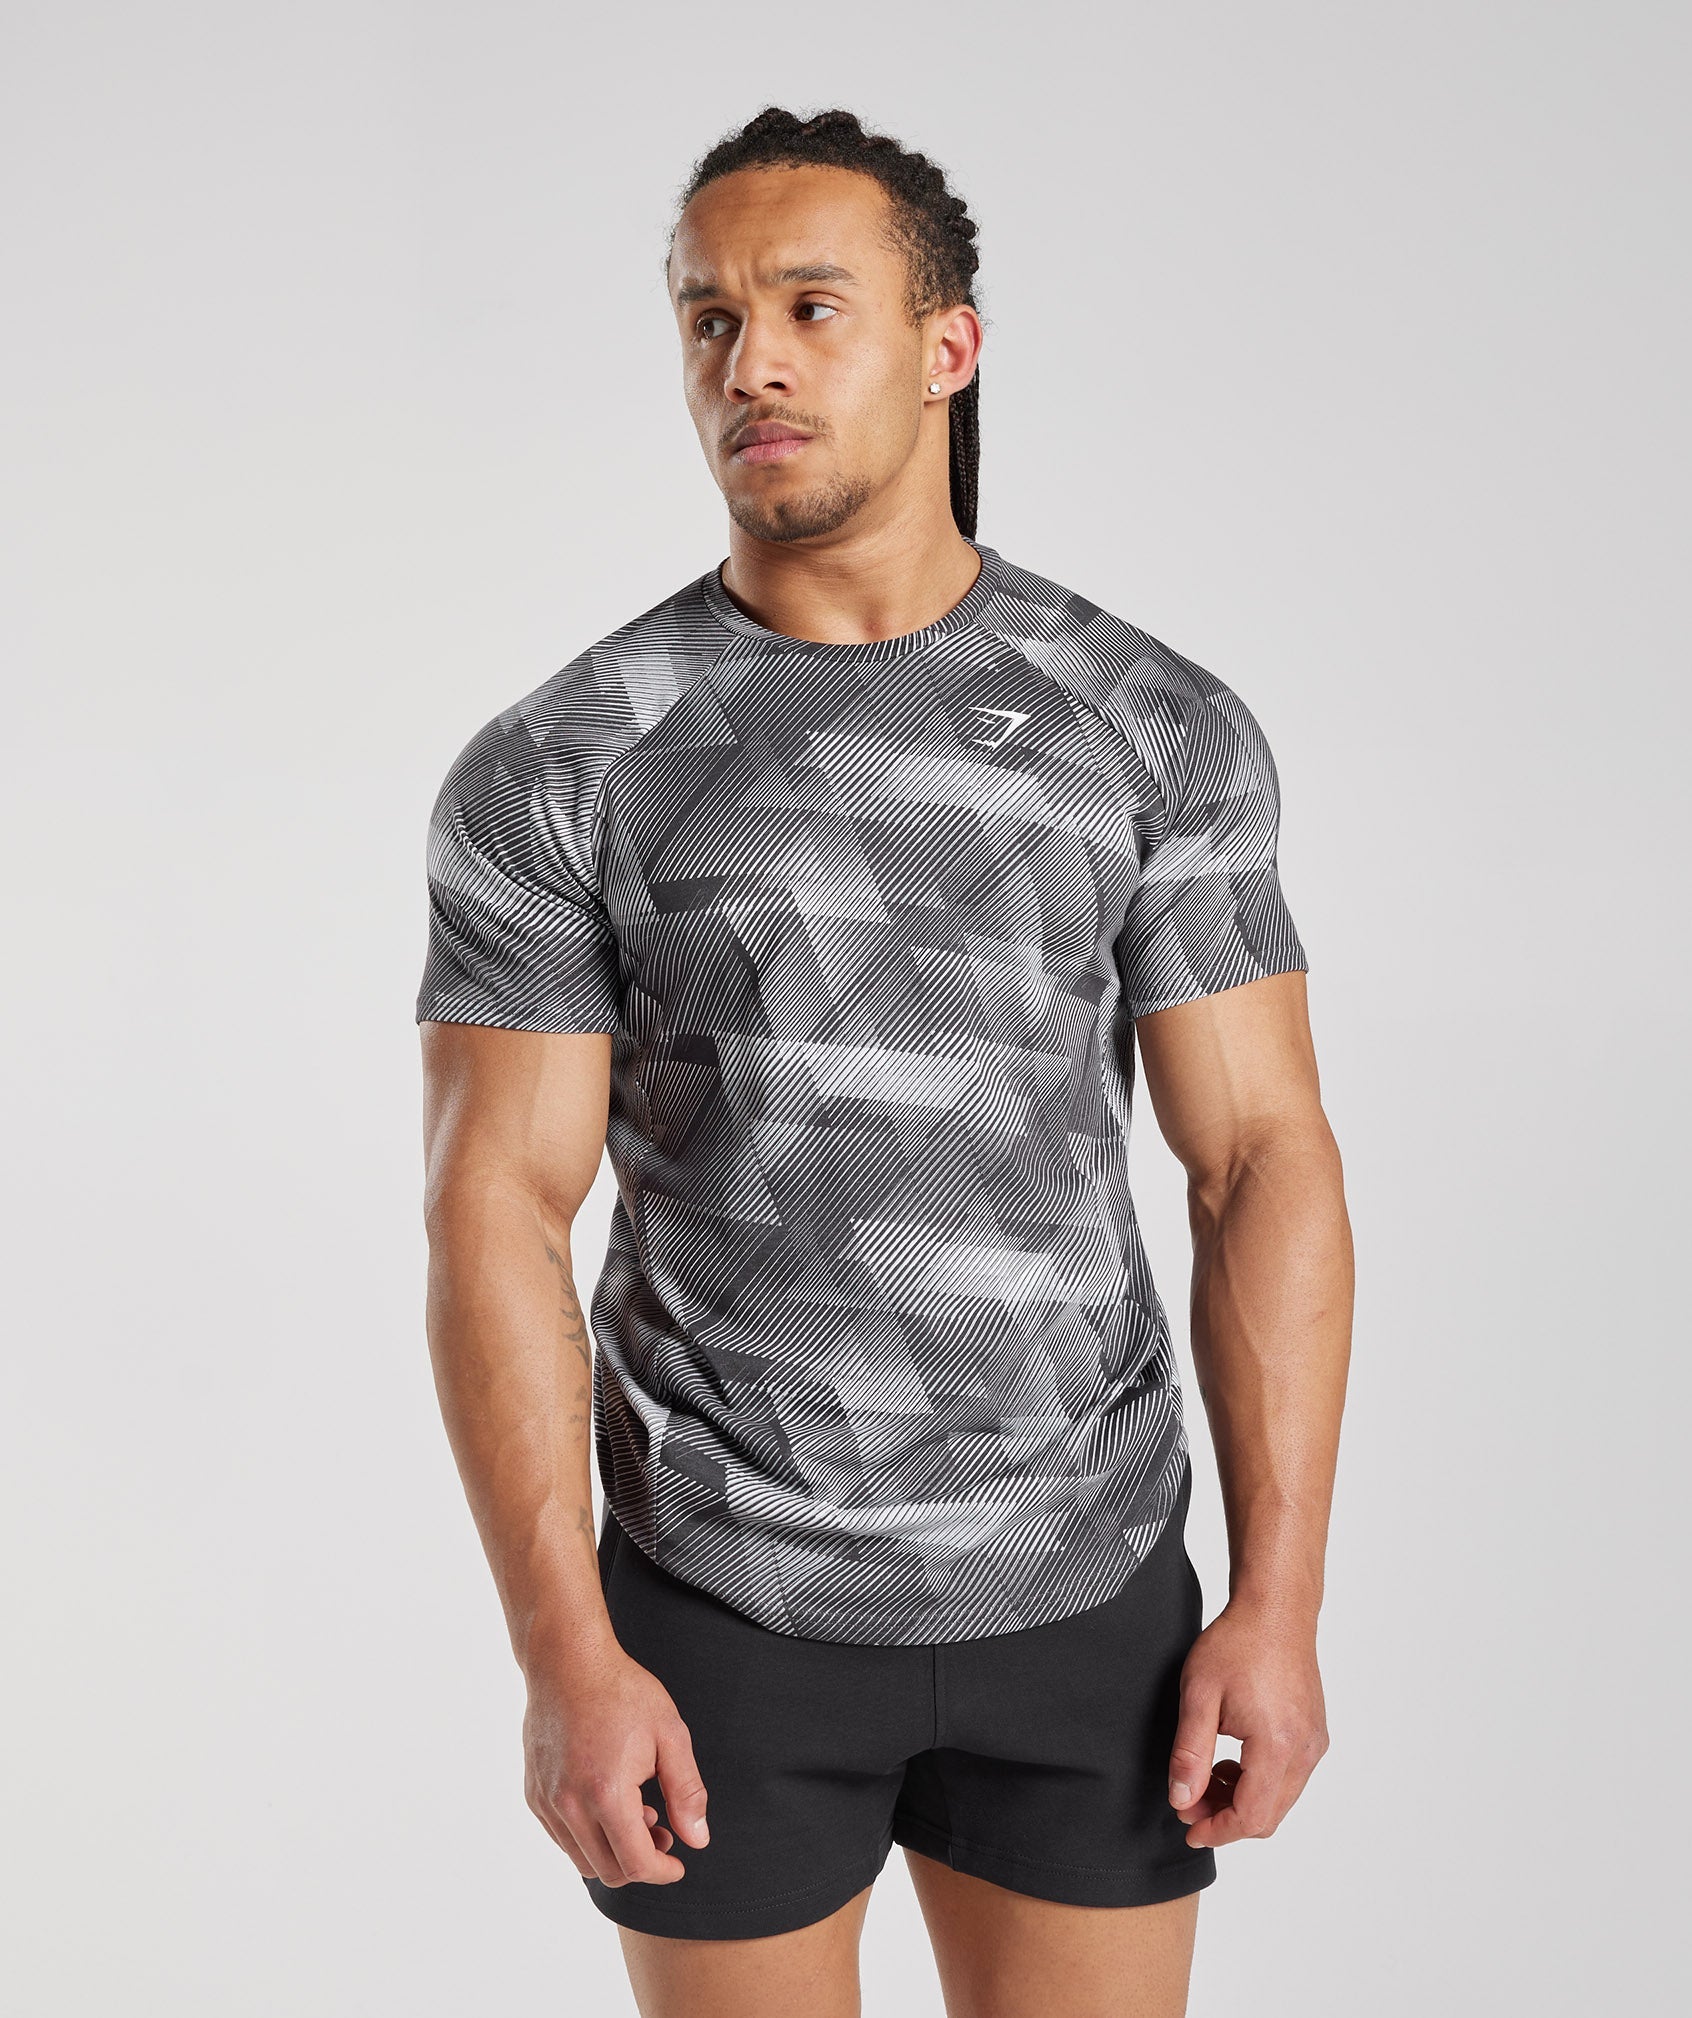 Gymshark Lifting T-Shirt - Denim Teal